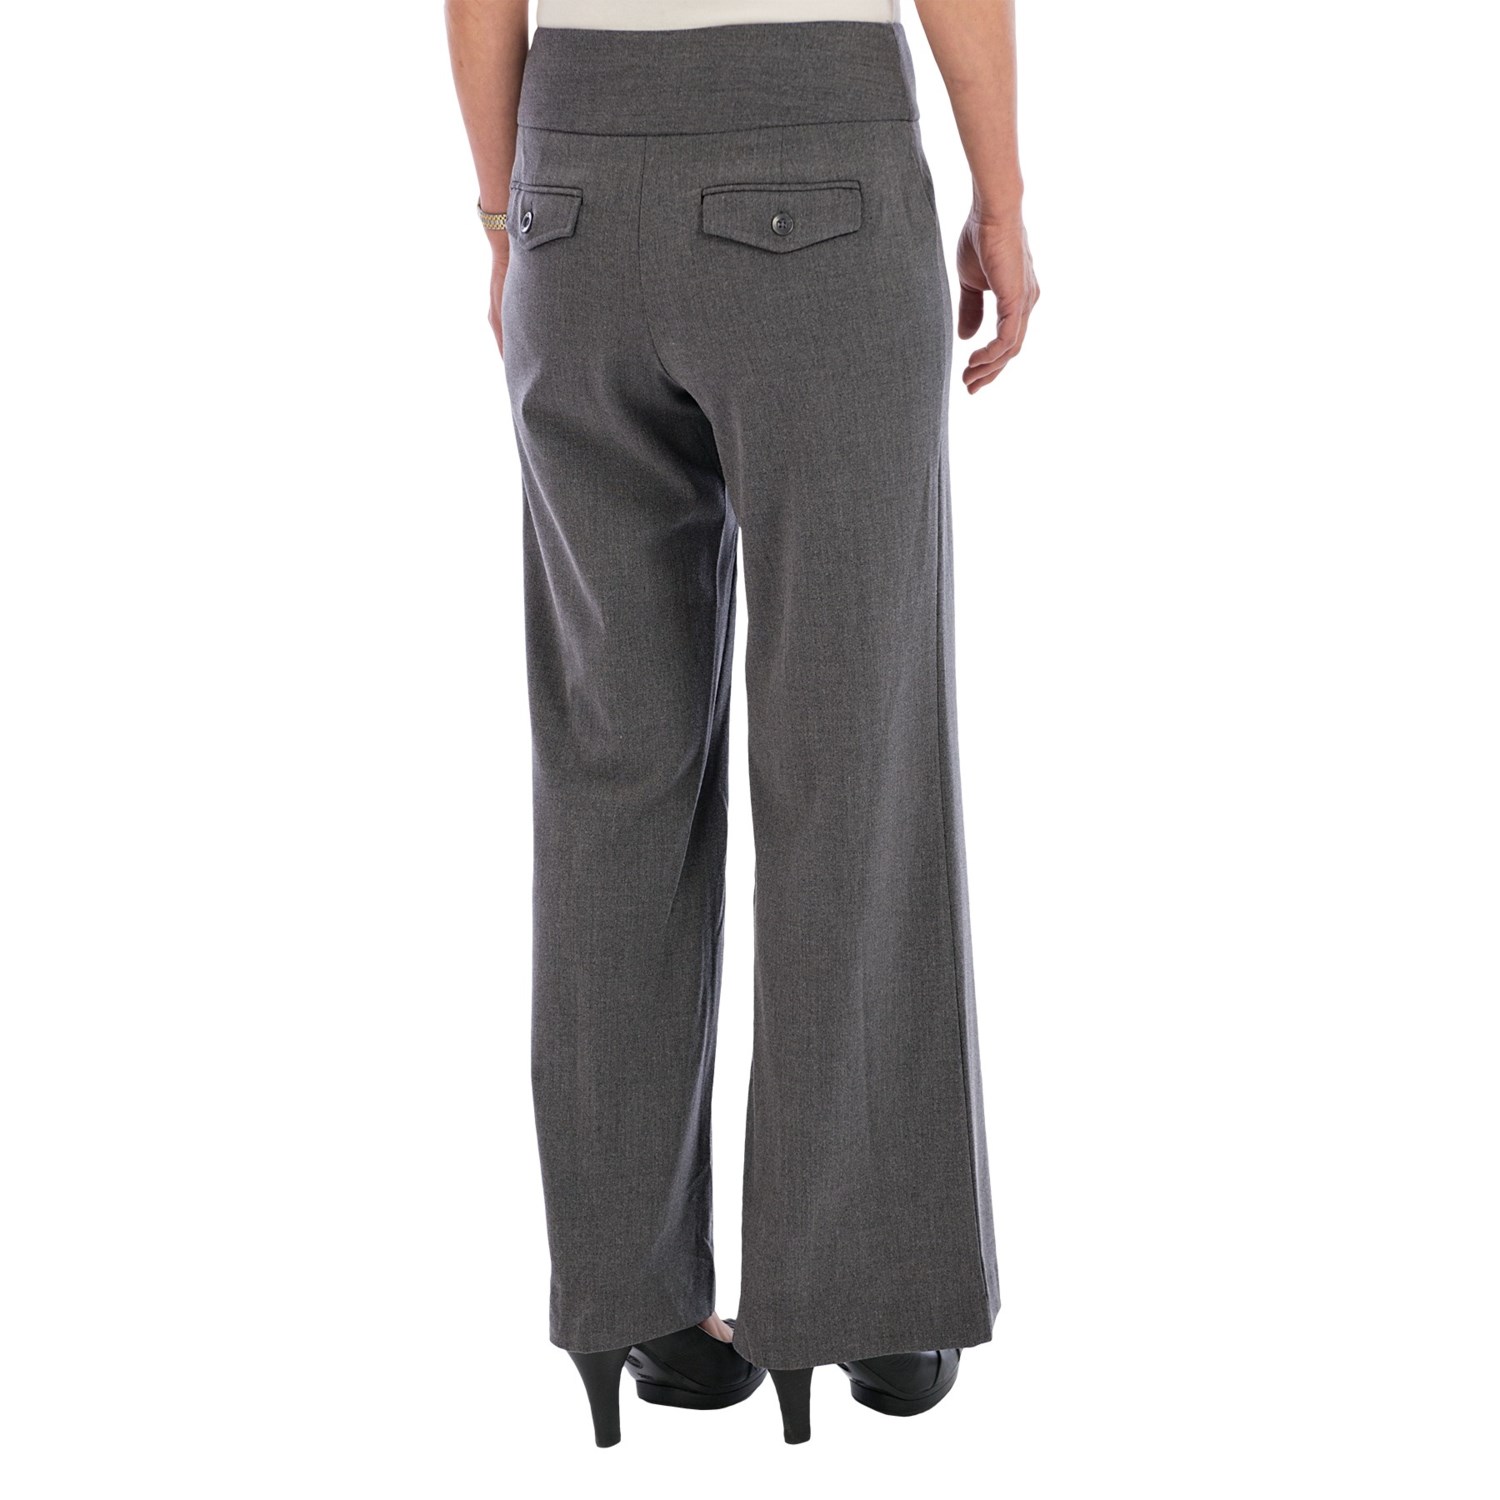 stretchy dress pants for women - Pi Pants